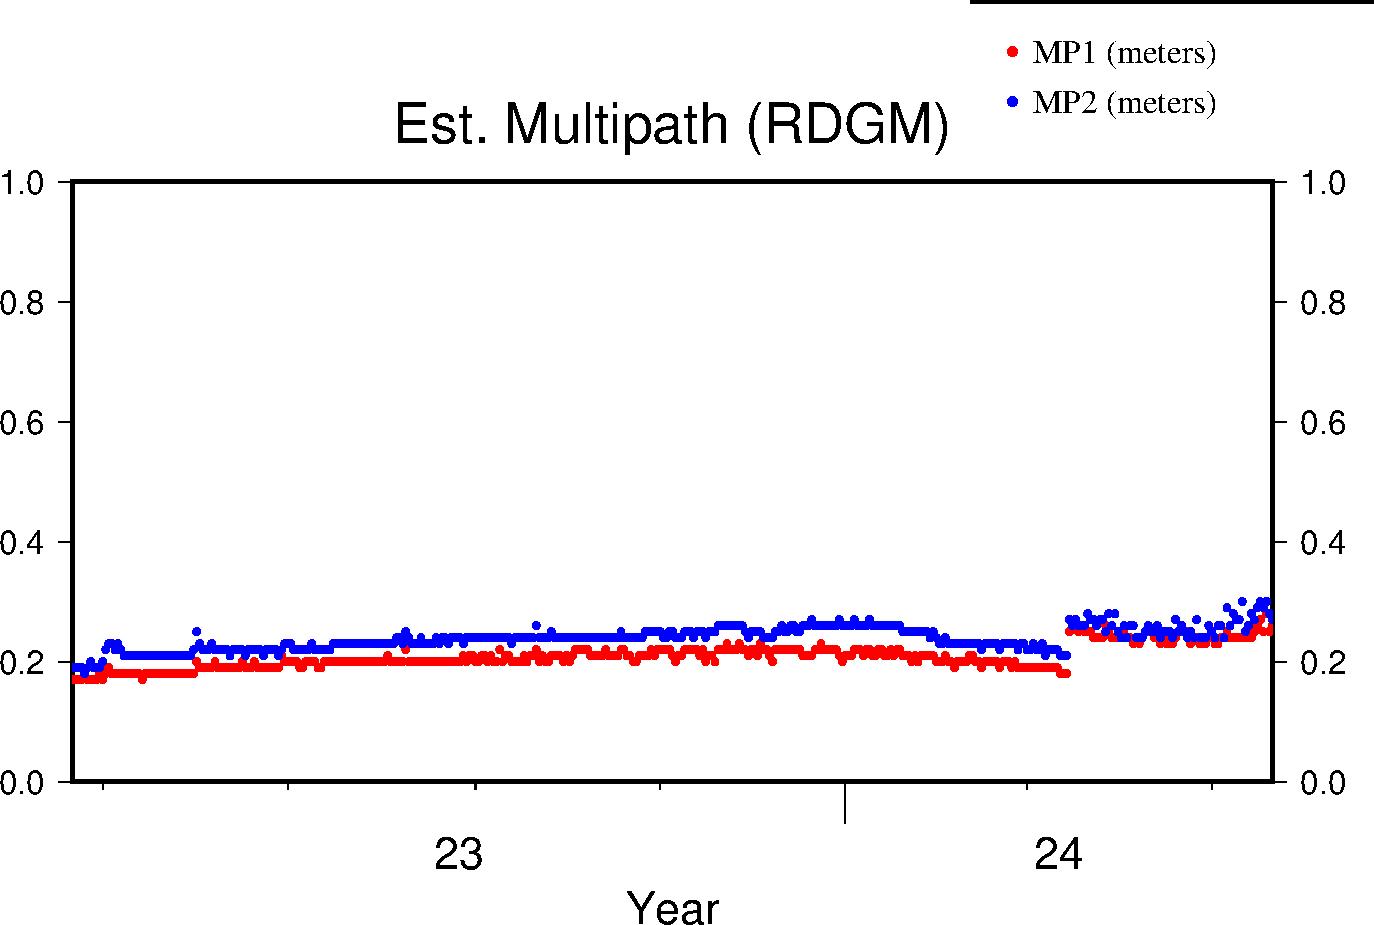 RDGM multipath lifetime